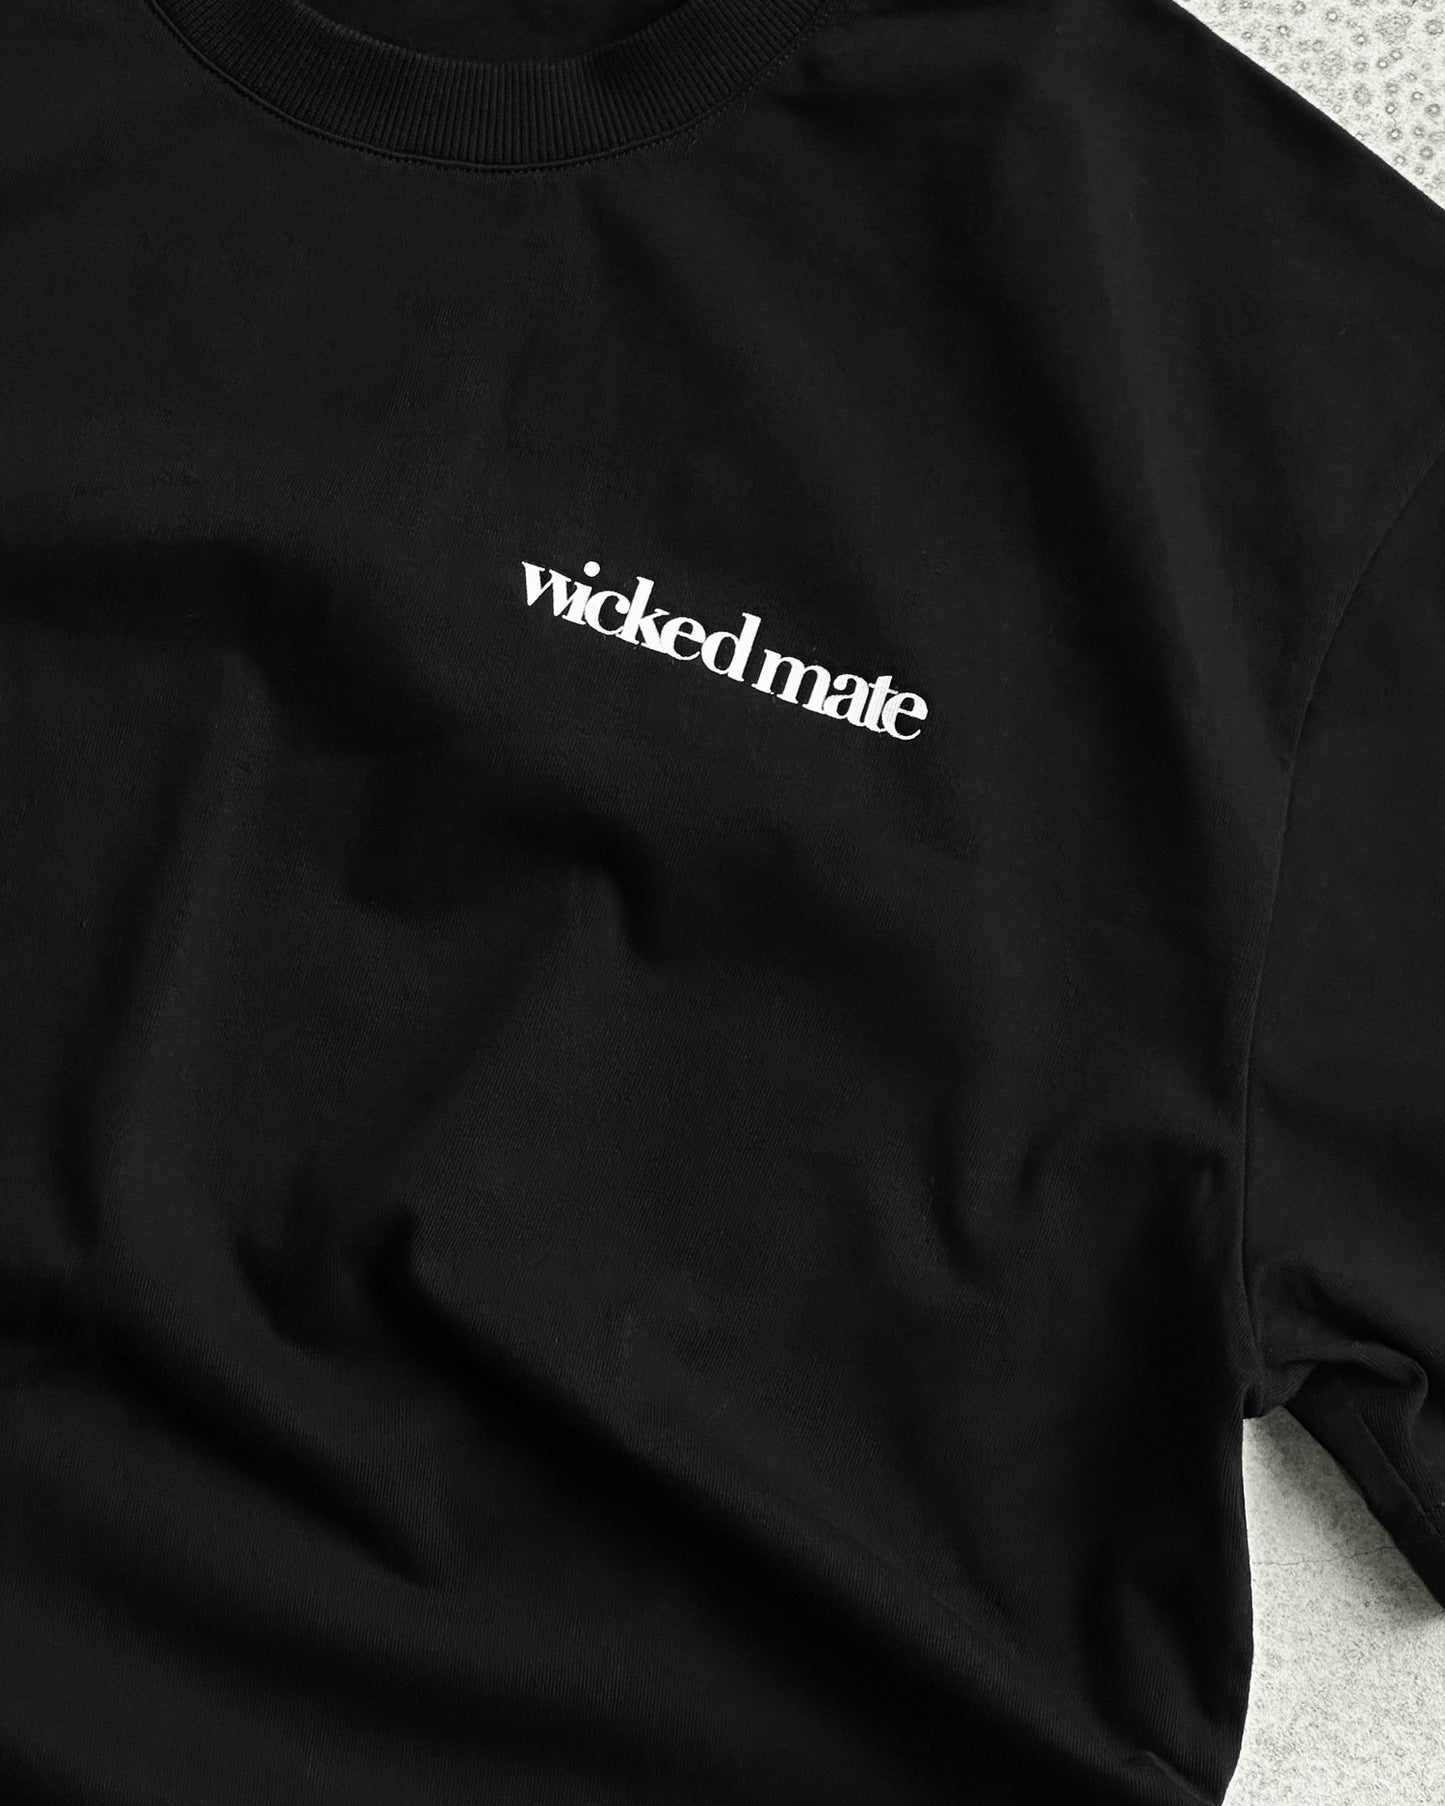 WICKEDMATE LOGO T-SHIRTS / BLACK